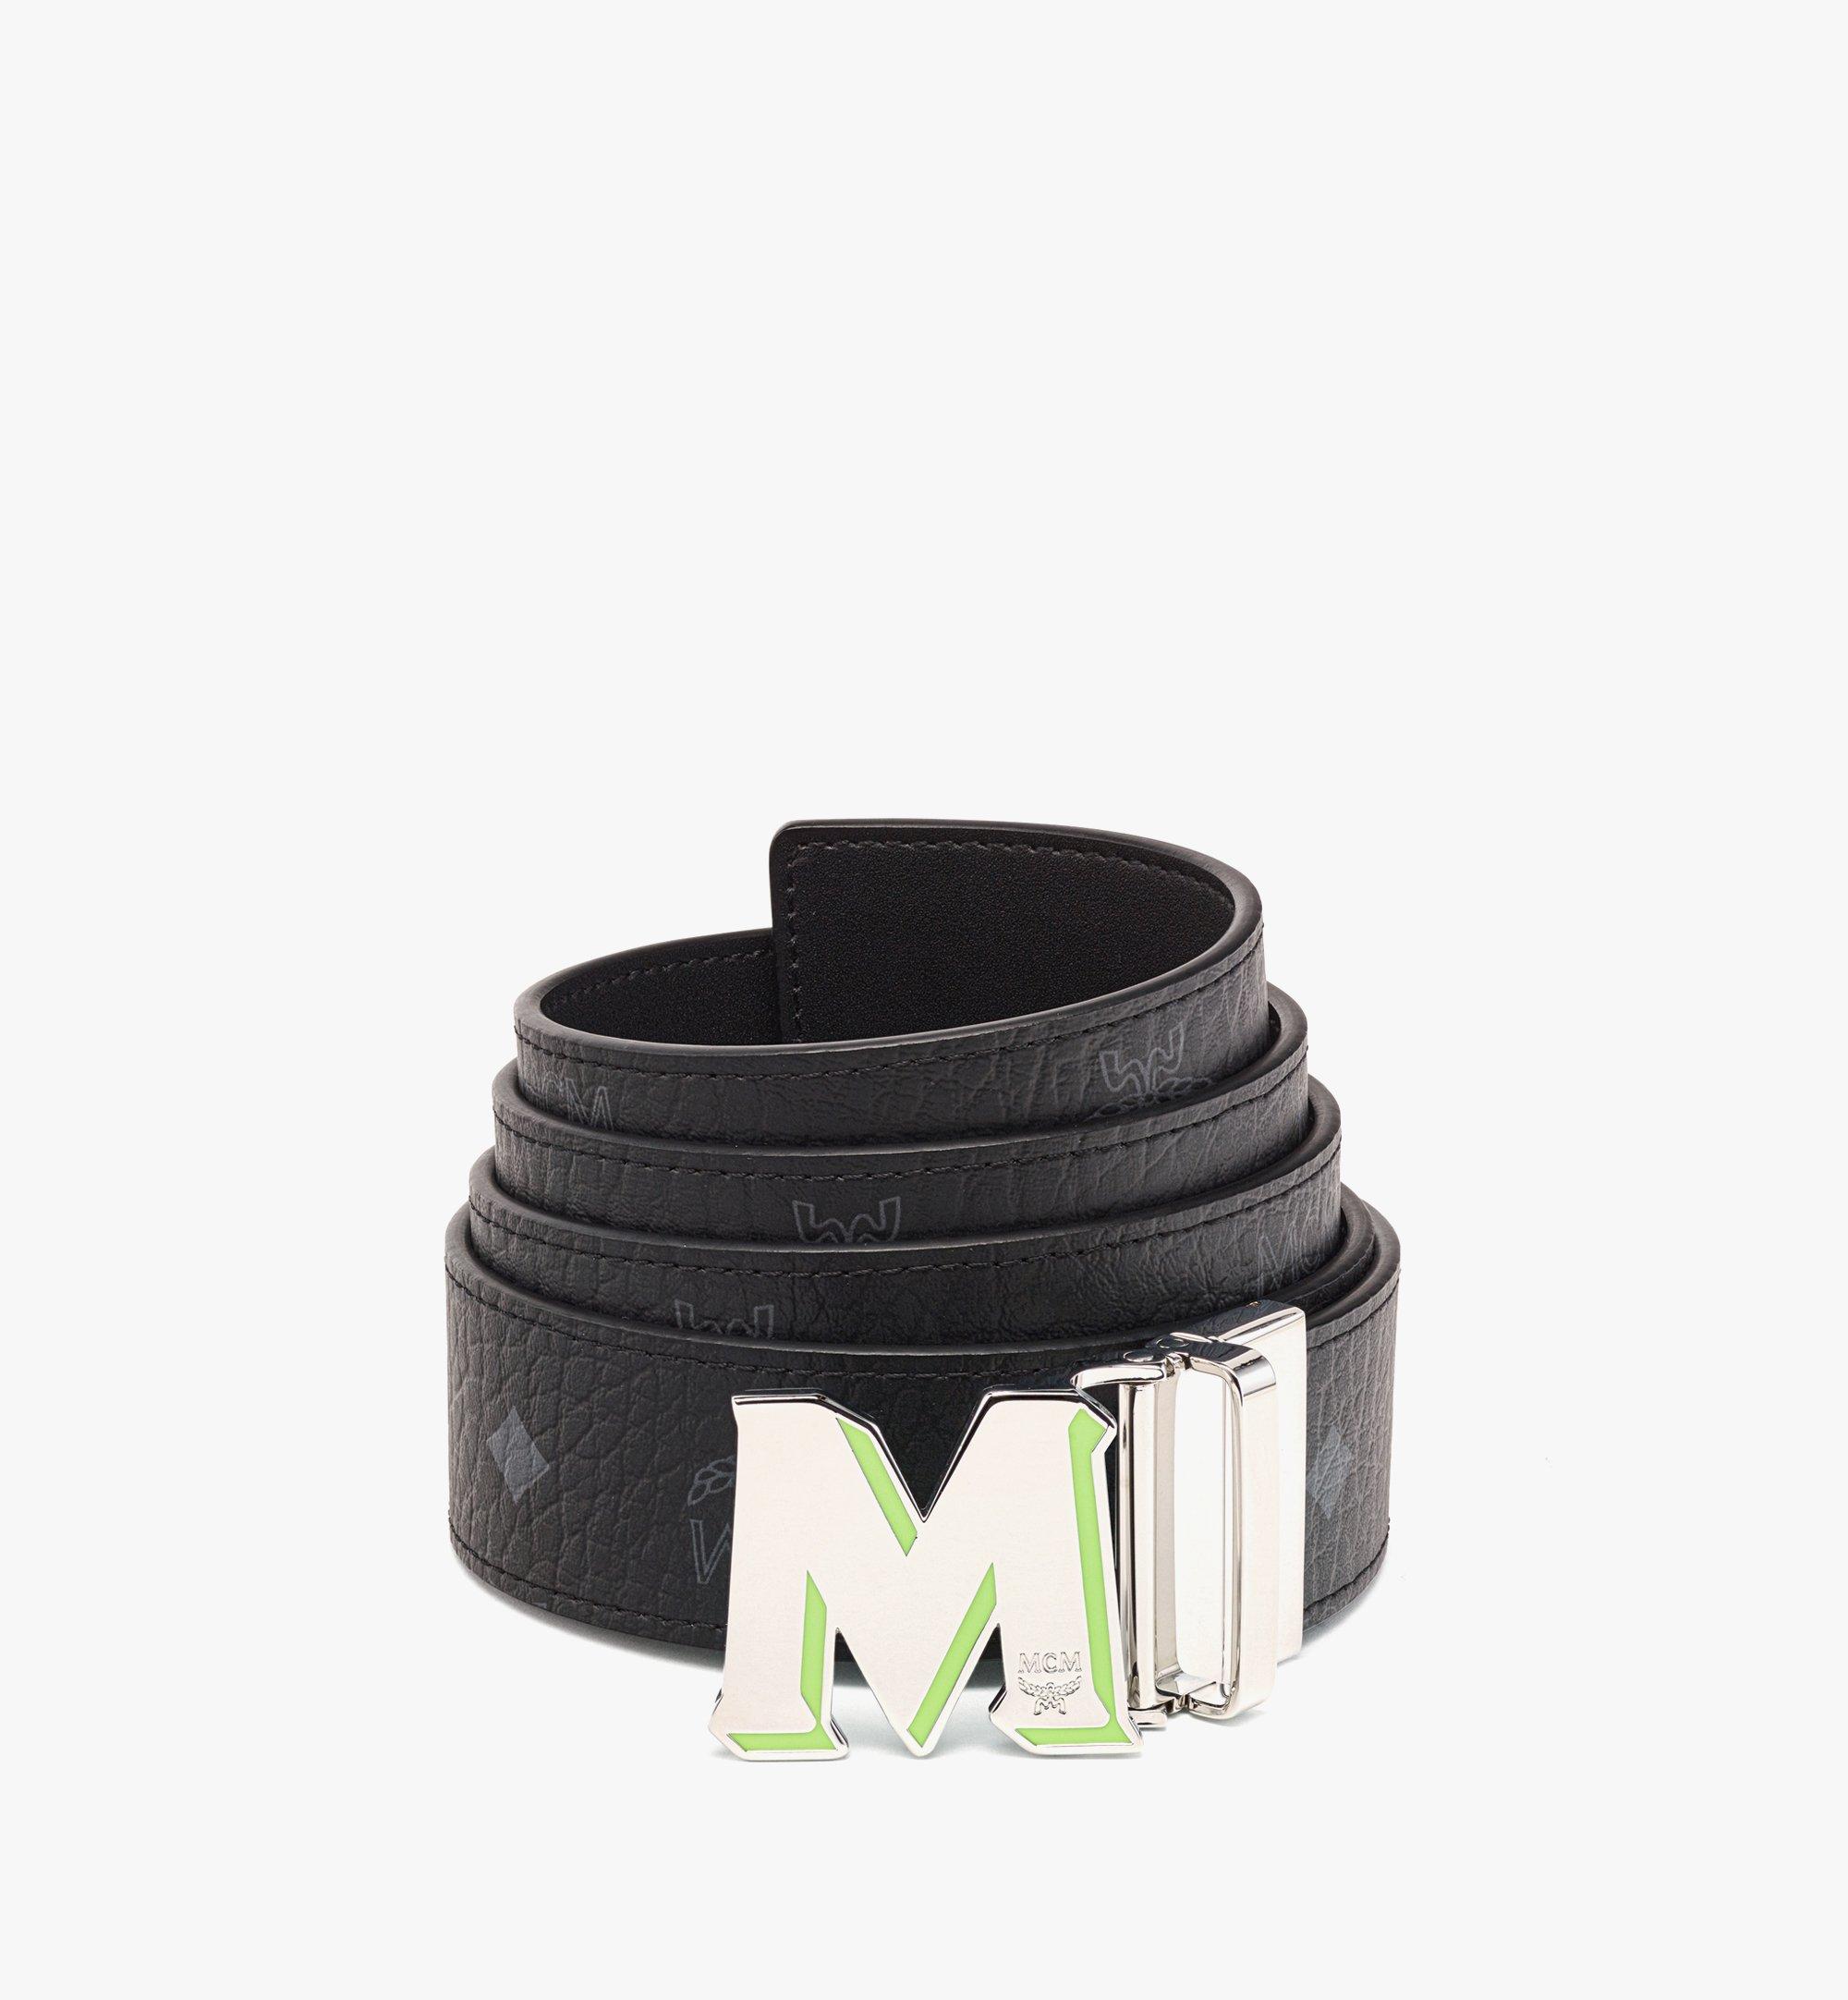 MCM Leather Belt Kit - Blue Belts, Accessories - W3050954